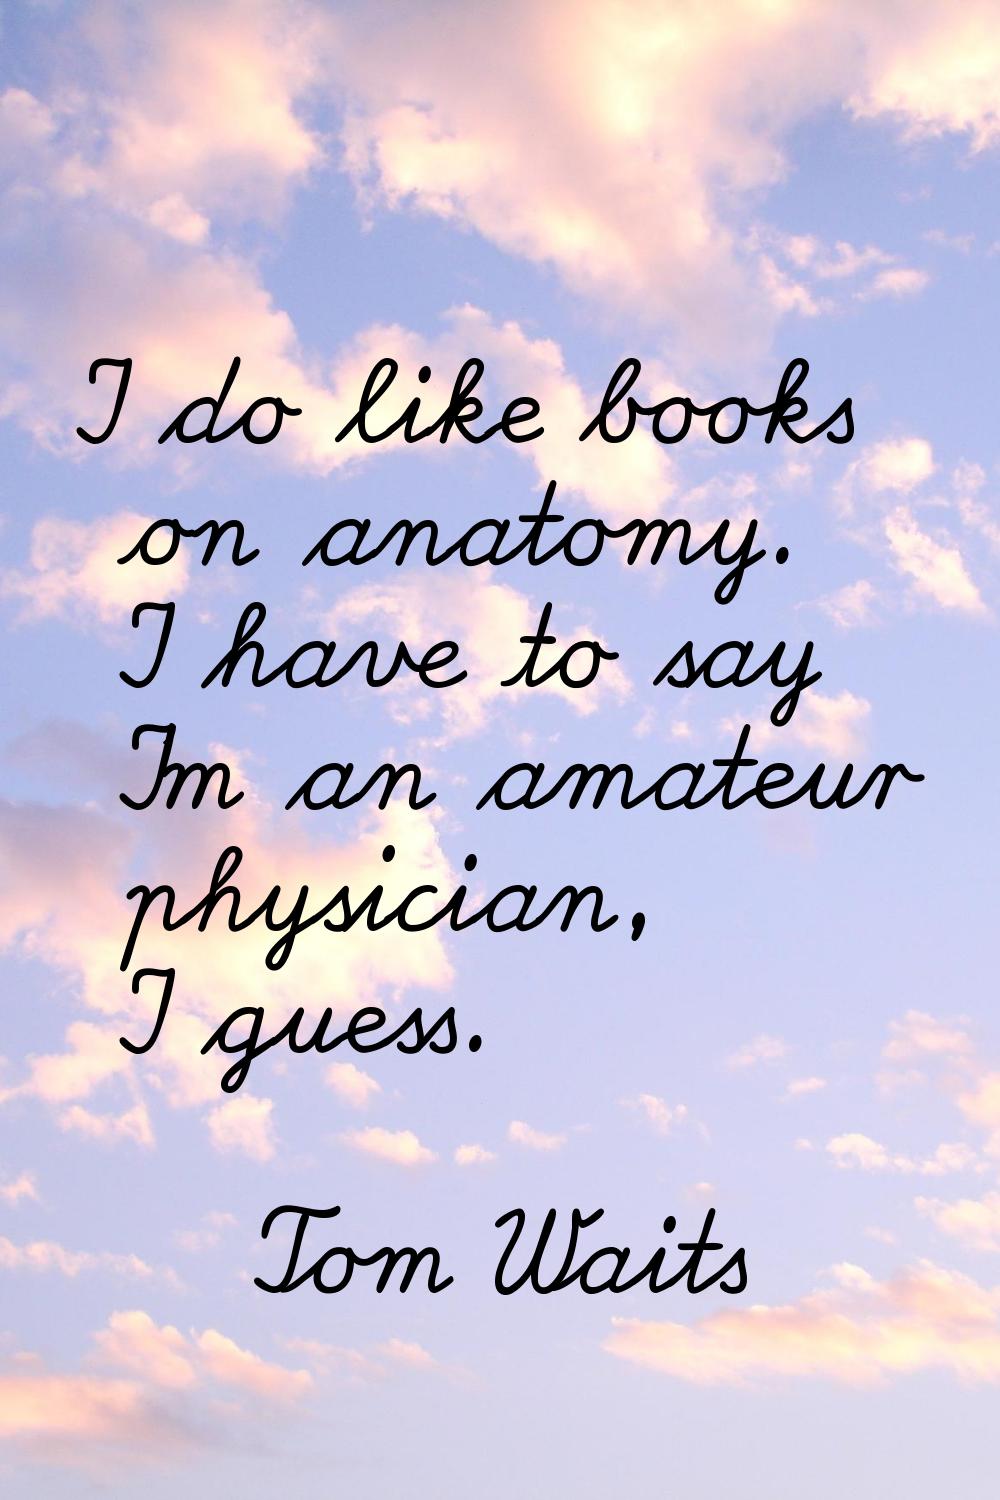 I do like books on anatomy. I have to say I'm an amateur physician, I guess.